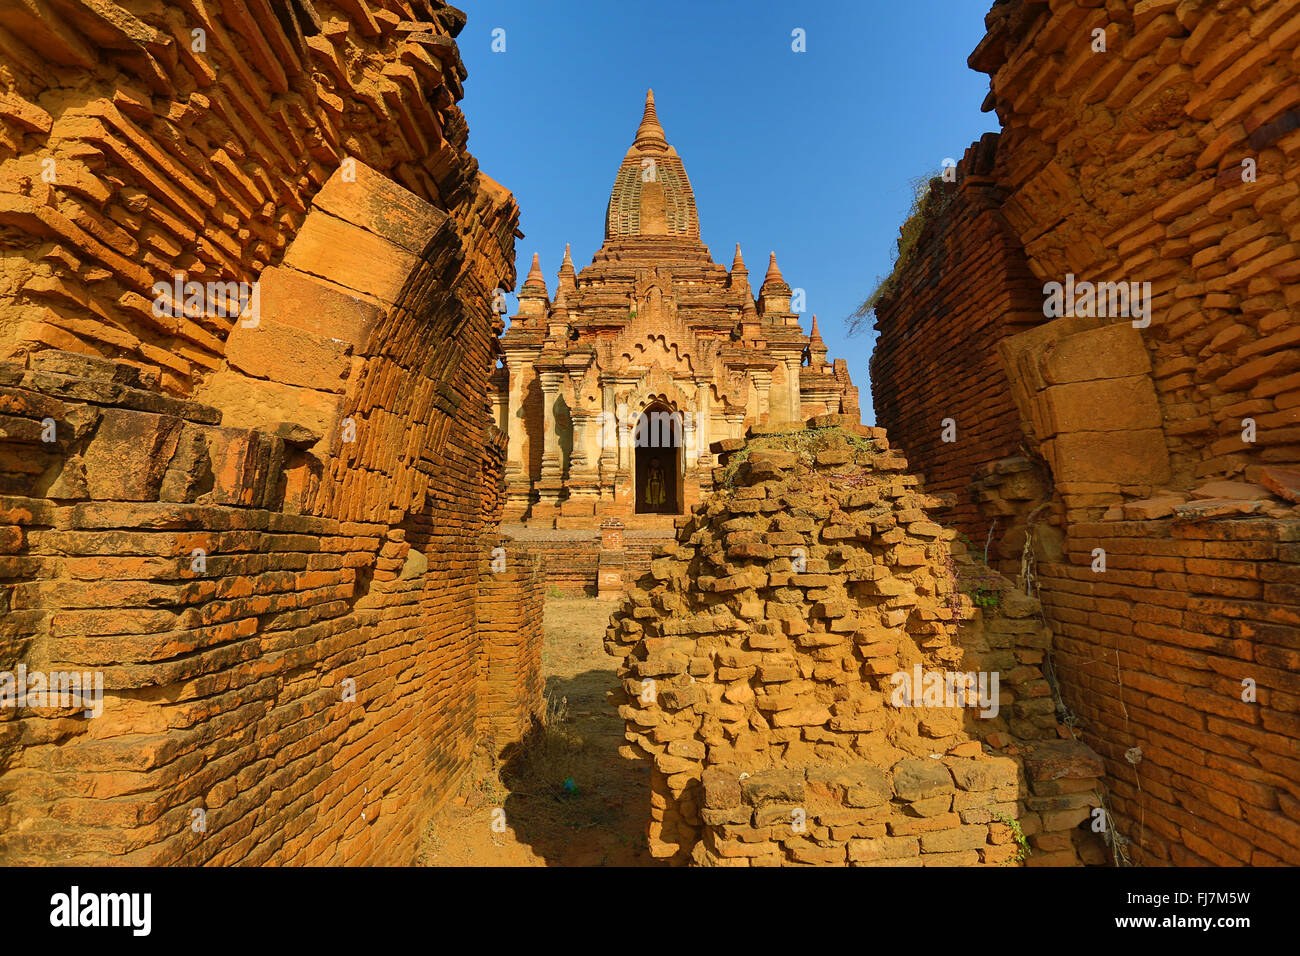 Shwe Leik troppo Pagoda di Bagan, Myanmar (Birmania) Foto Stock